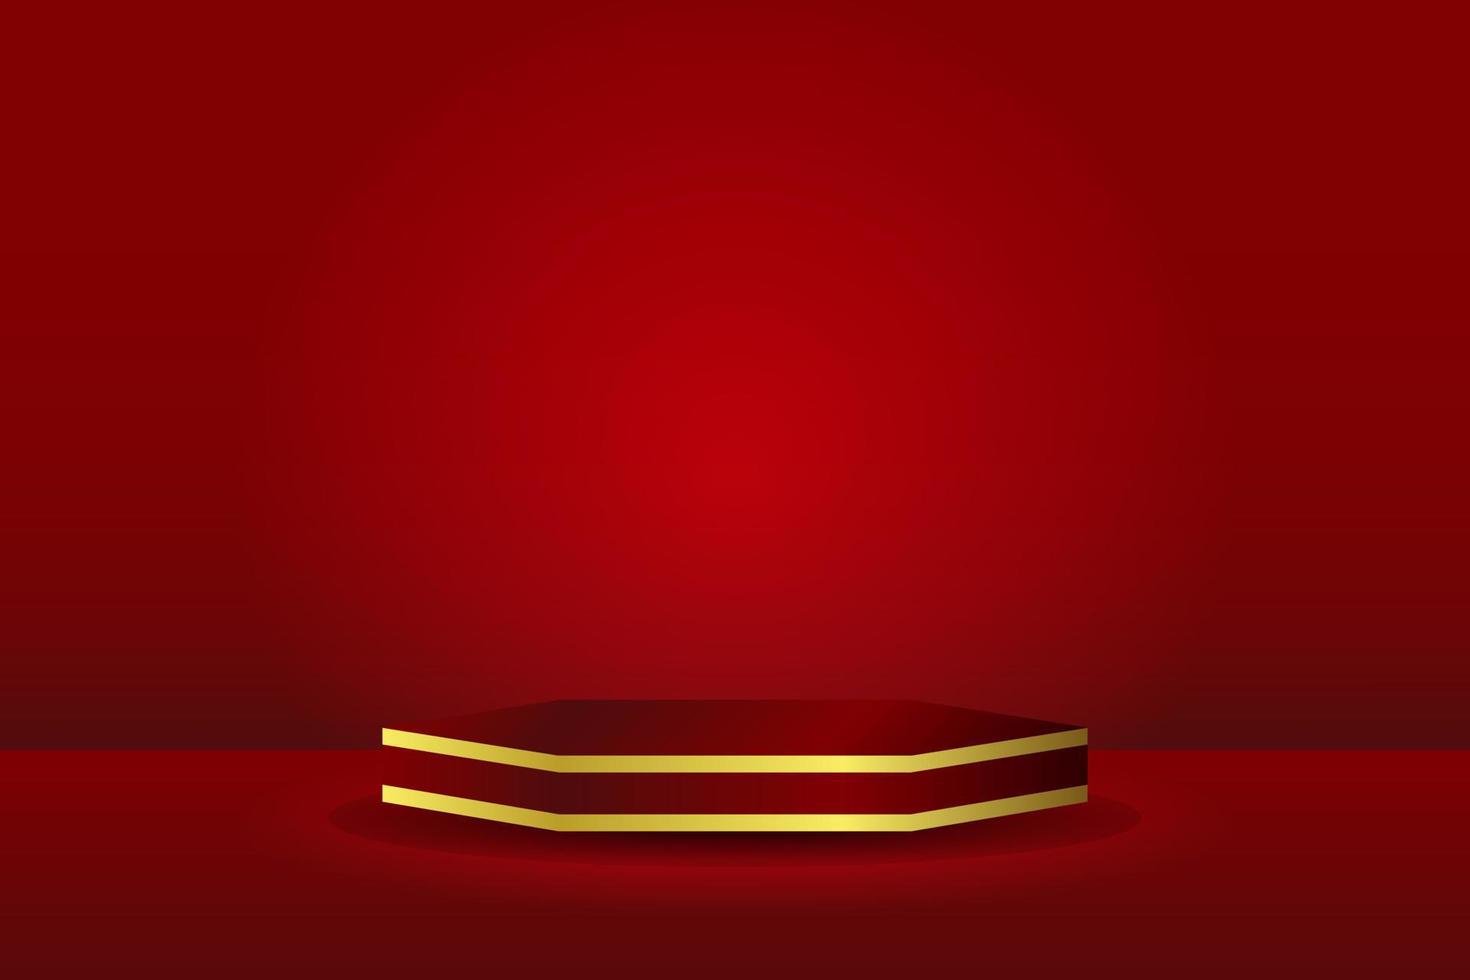 Abstract realistic 3D red hexagonal pedestal or podium. Dark red minimal scene for product display presentation. Vector rendering geometric platform design